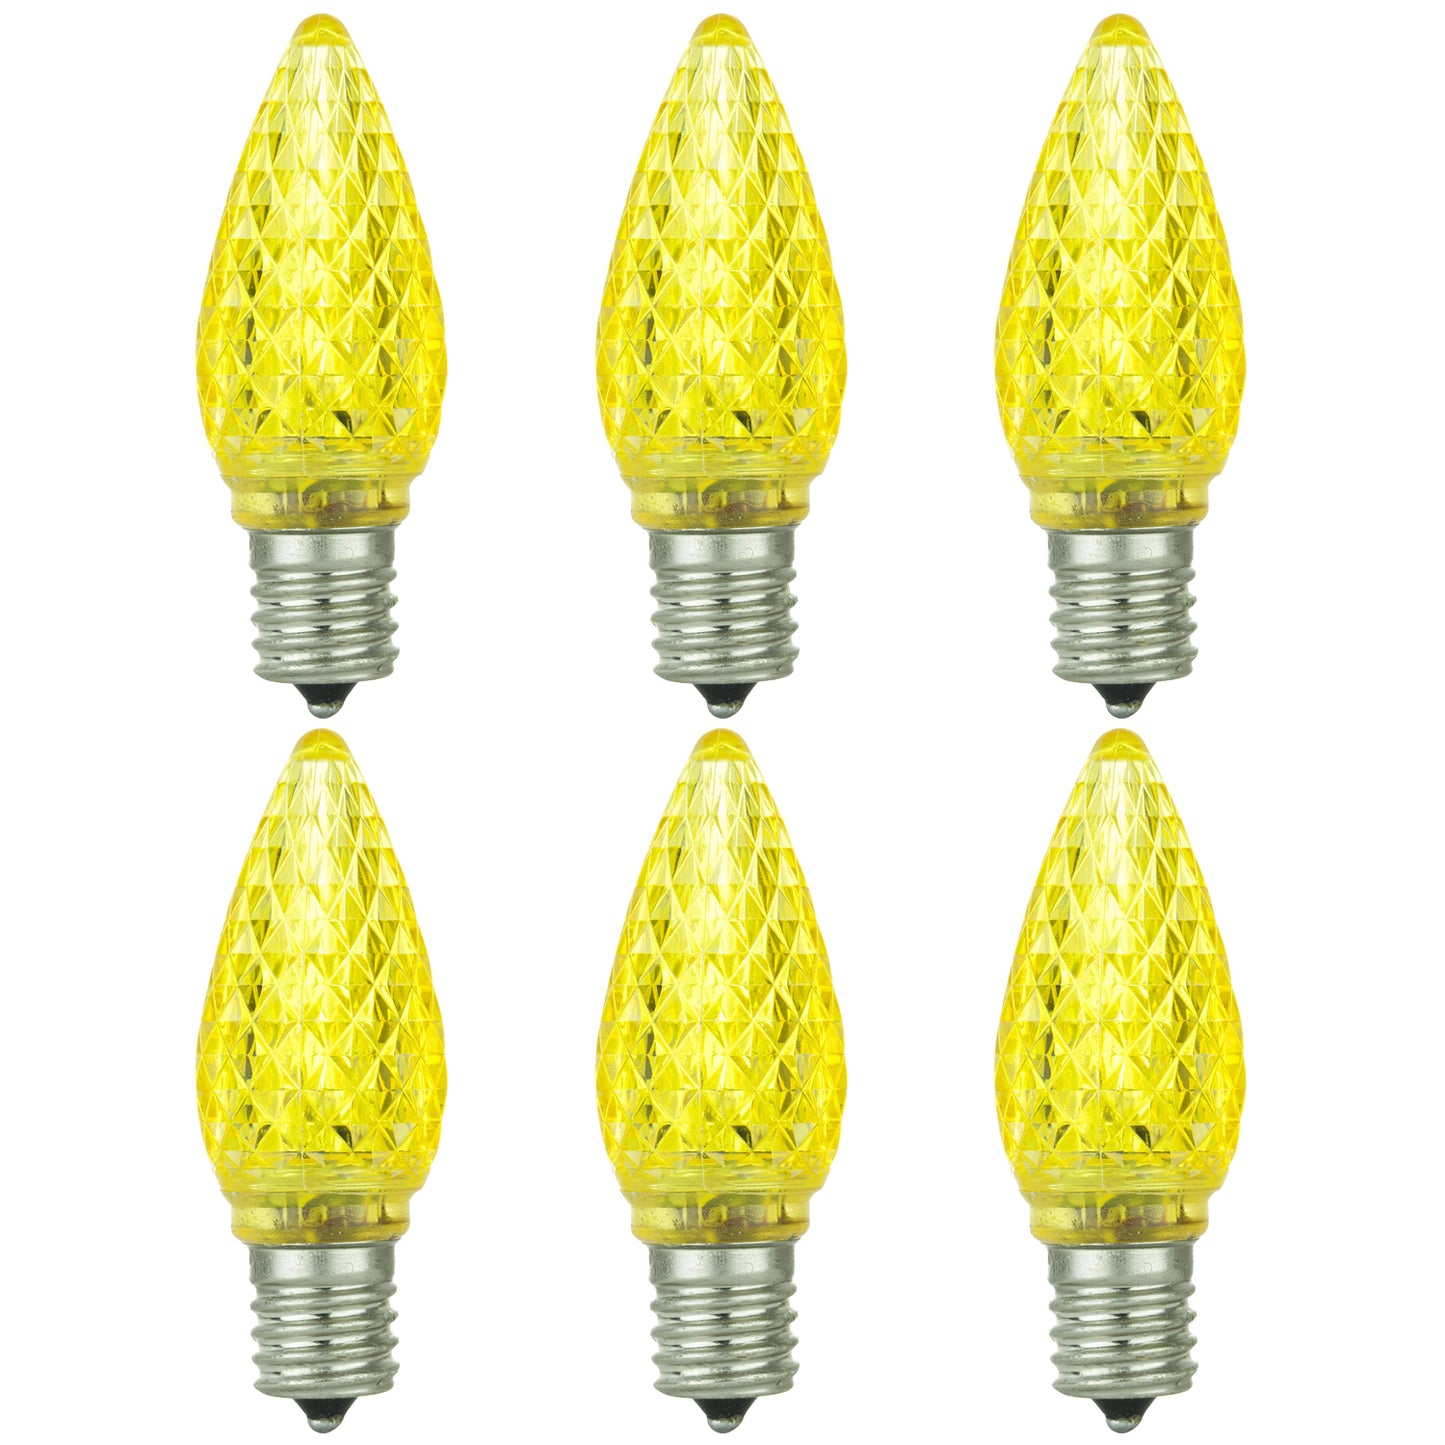 Sunlite LED C9 0.4W Yellow Colored Decorative Chandelier Light Bulbs, Intermediate (E17) Base